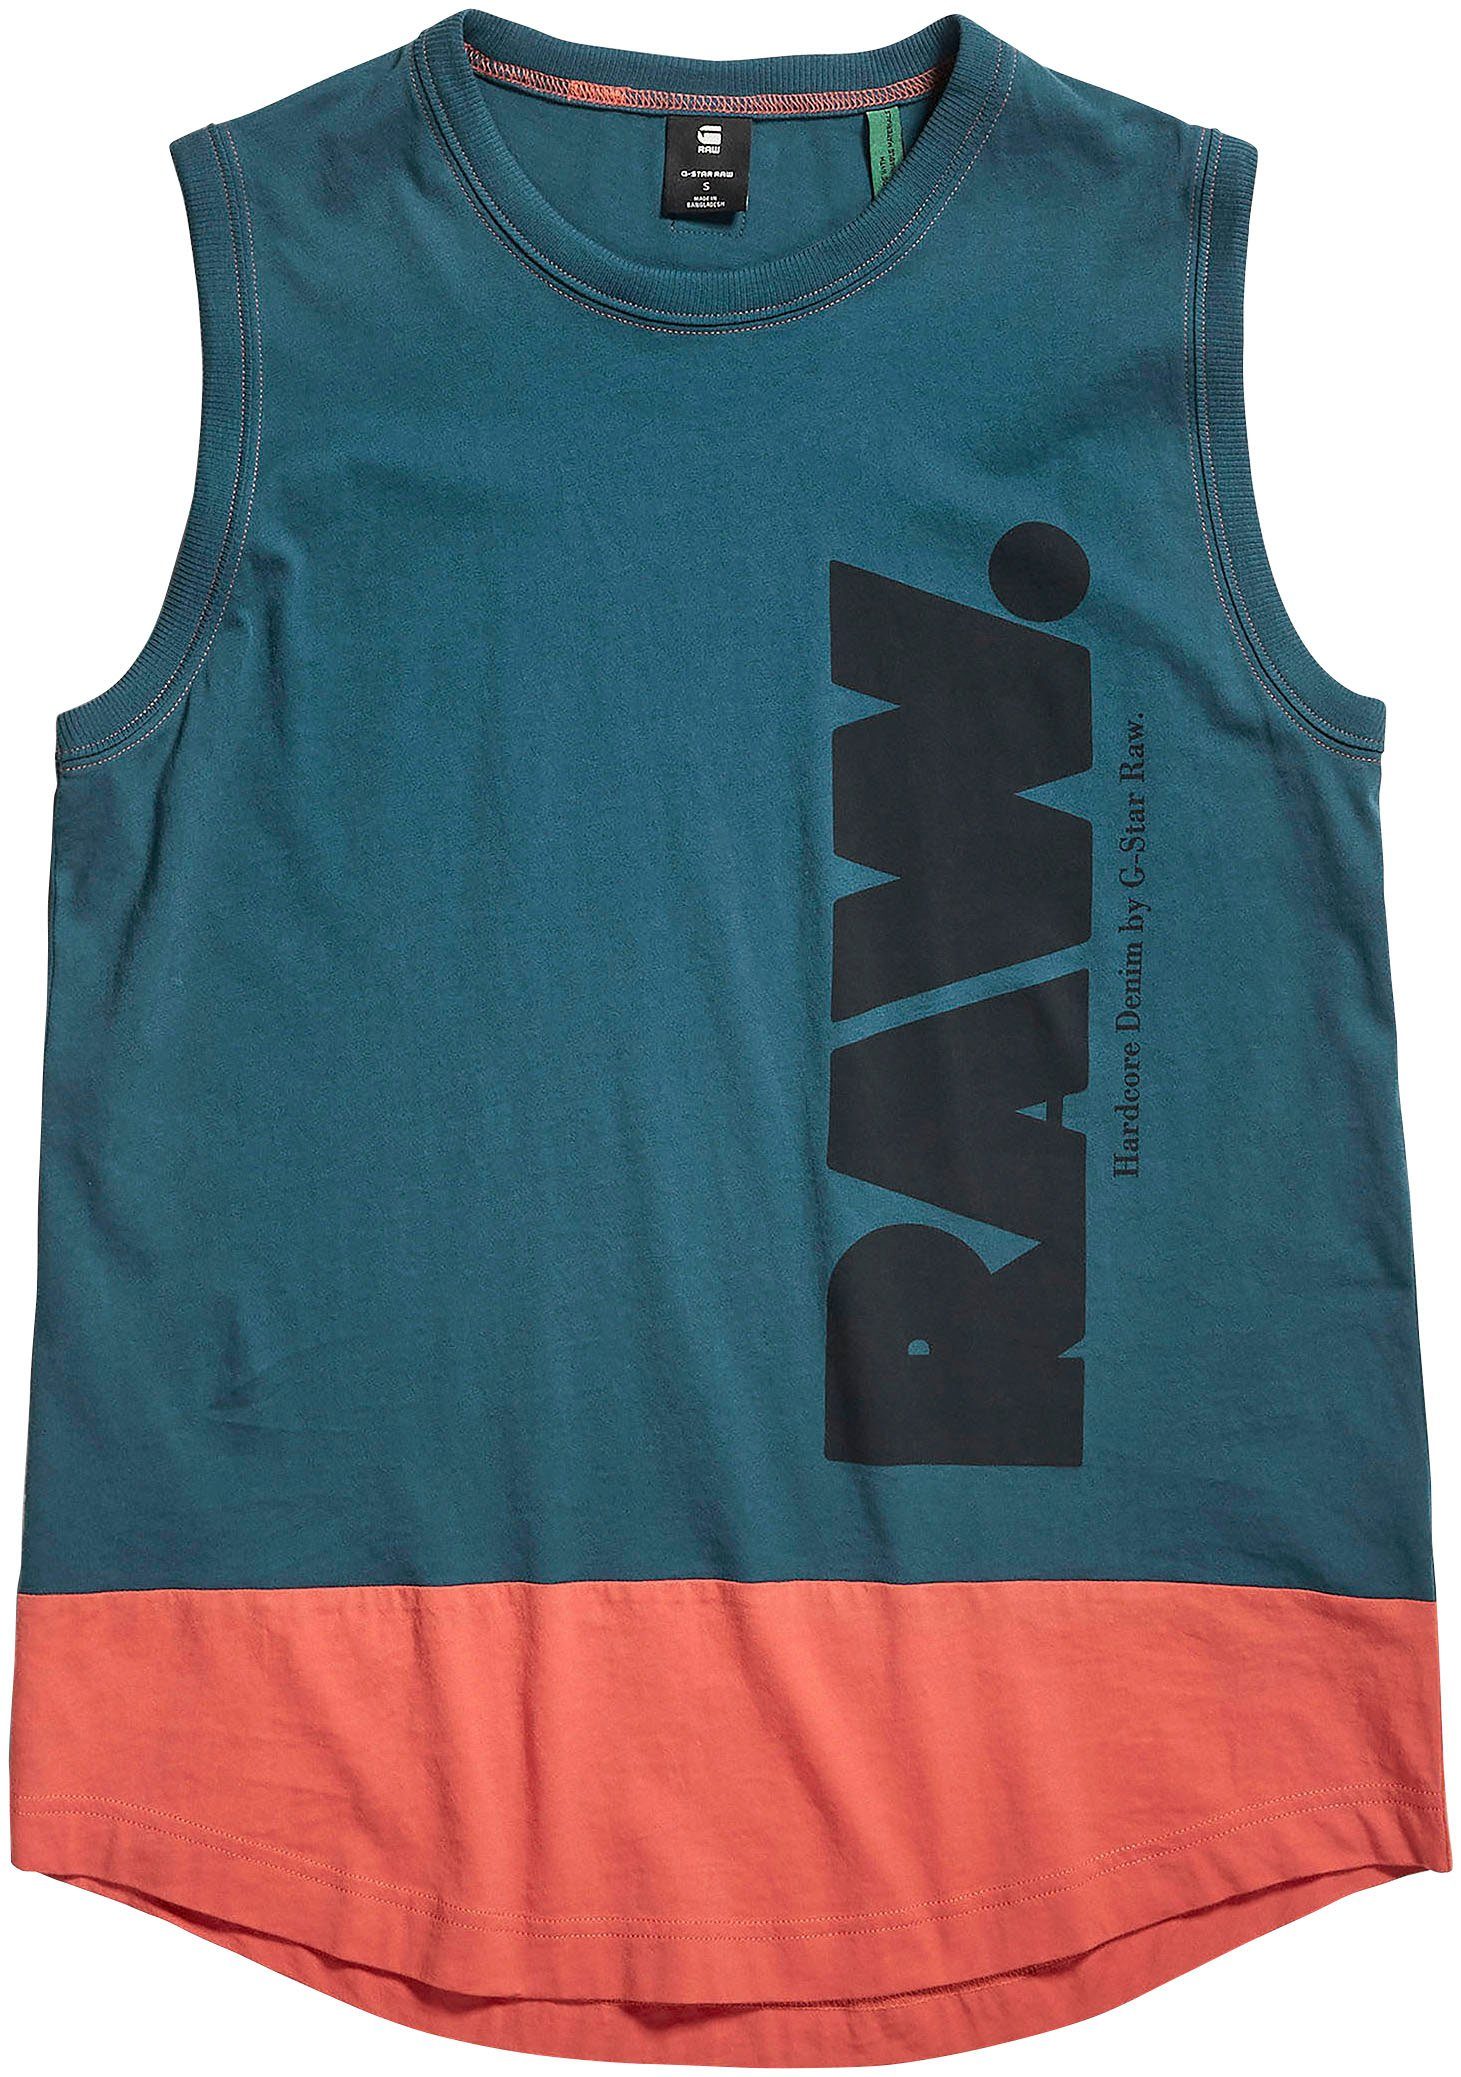 G-Star RAW T-Shirt T-Shirt vorne block (petrol/ block nitro/paprika mti color tank Logo rotorange) color to Lash Grafikdruck